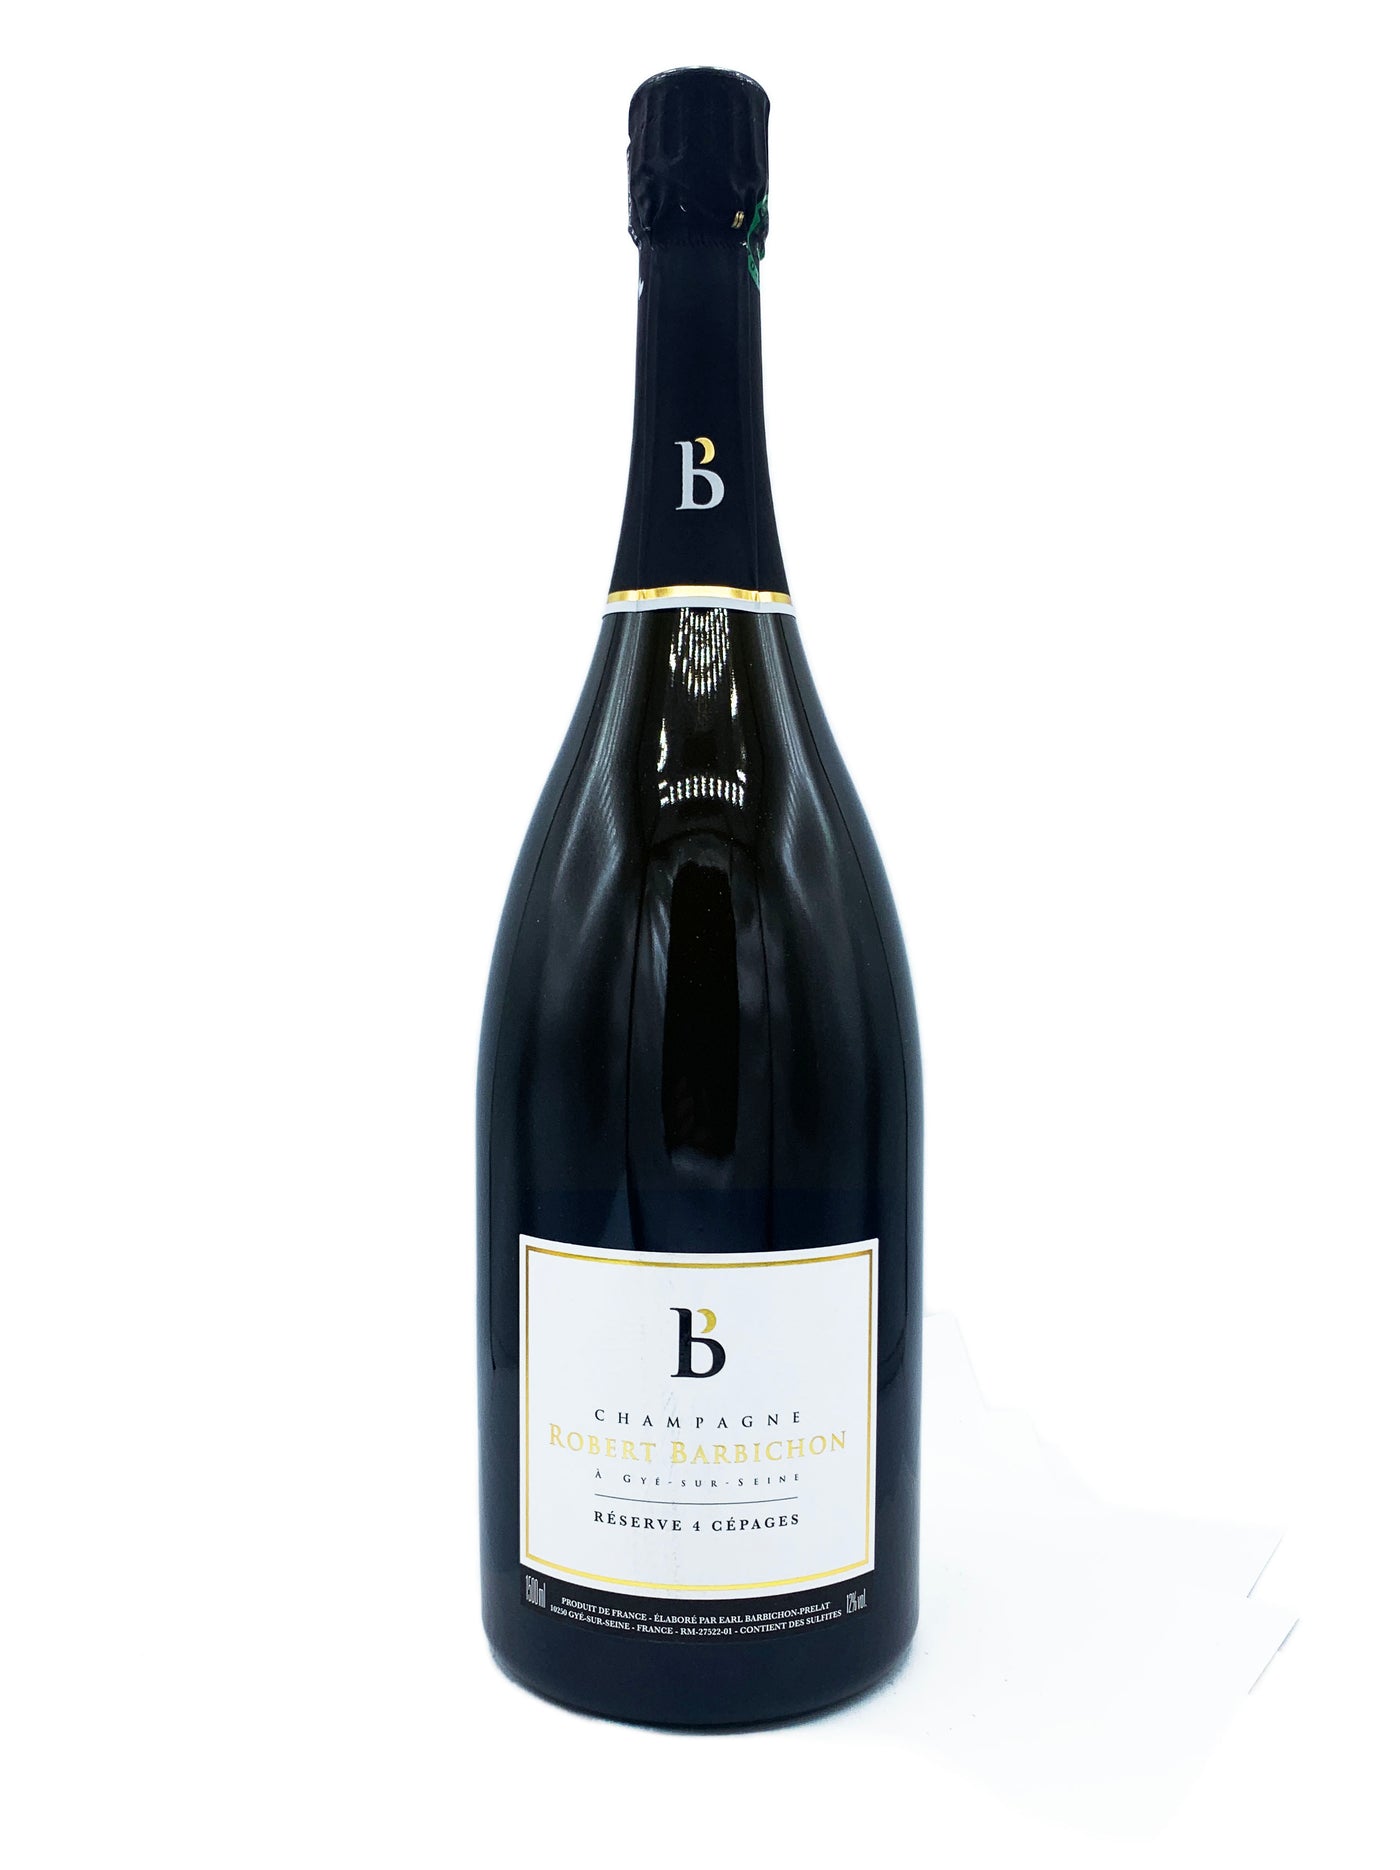 Champagne Robert Barbichon Reserve 4 Cepages Brut NV Magnum